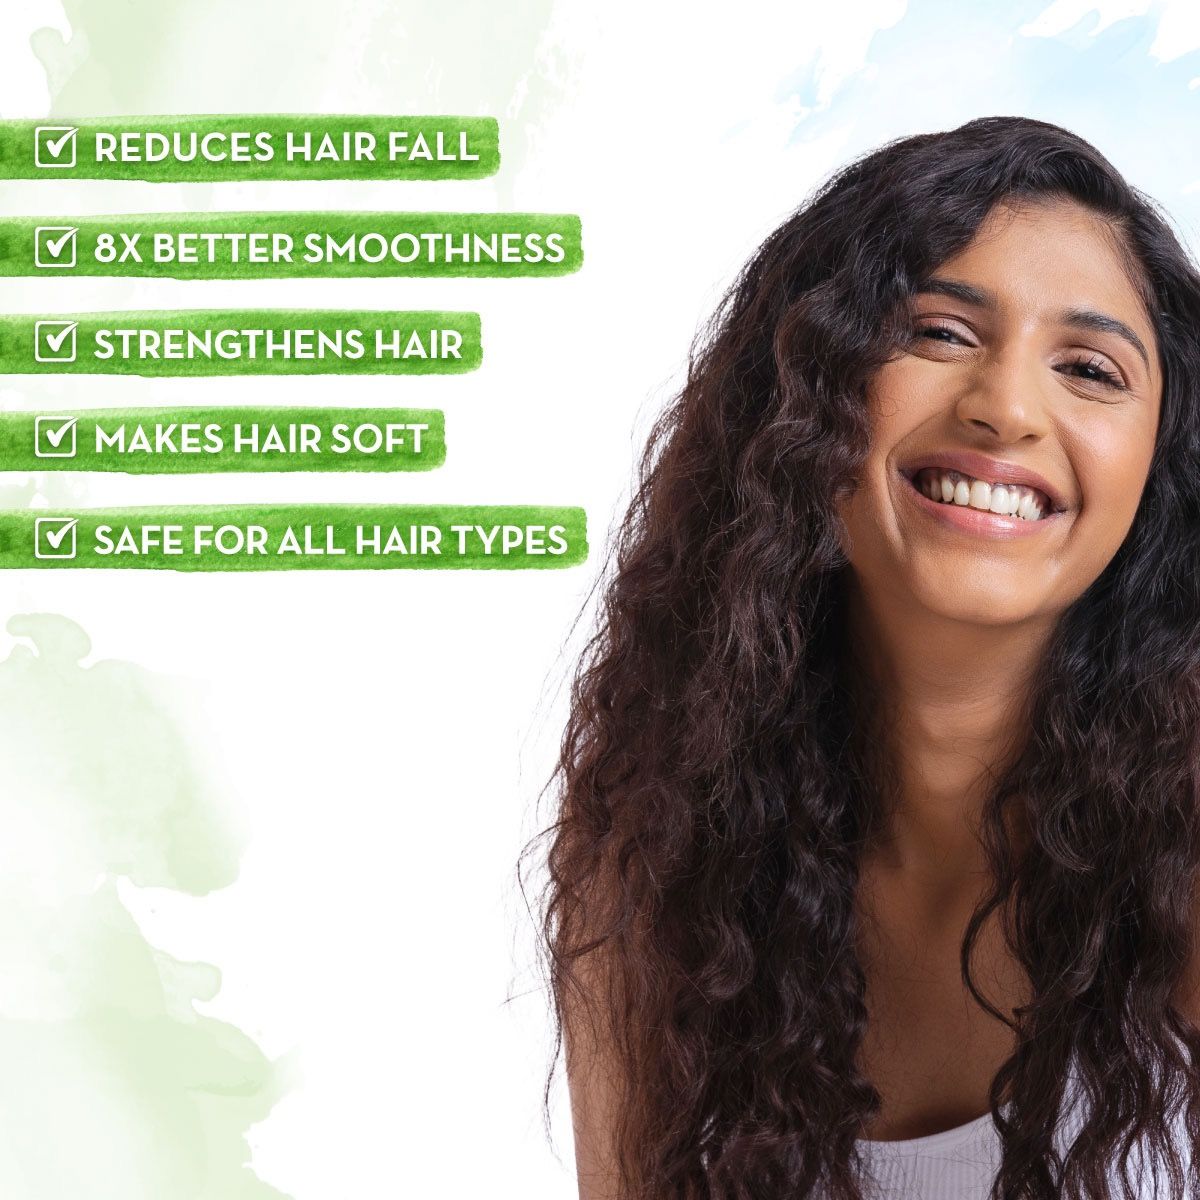 Mamaearth Onion Shampoo For Hair Growth & Hair Fall Control With Onion & Plant Keratin - 250ml